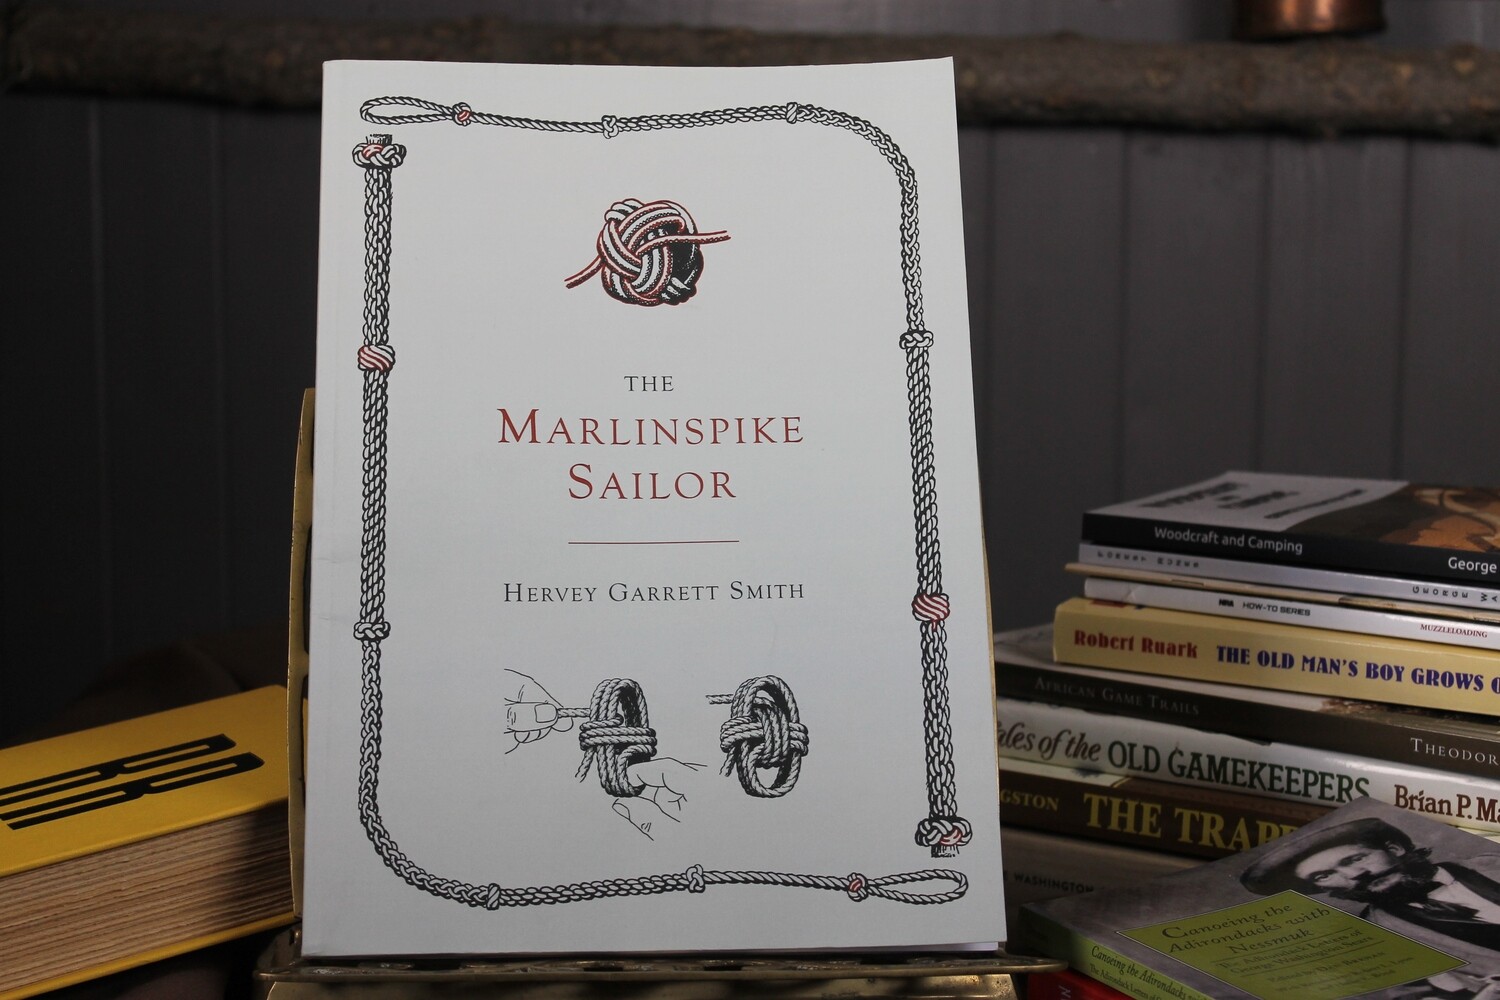 The Marlinspike Sailor by Hervey Garrett Smith